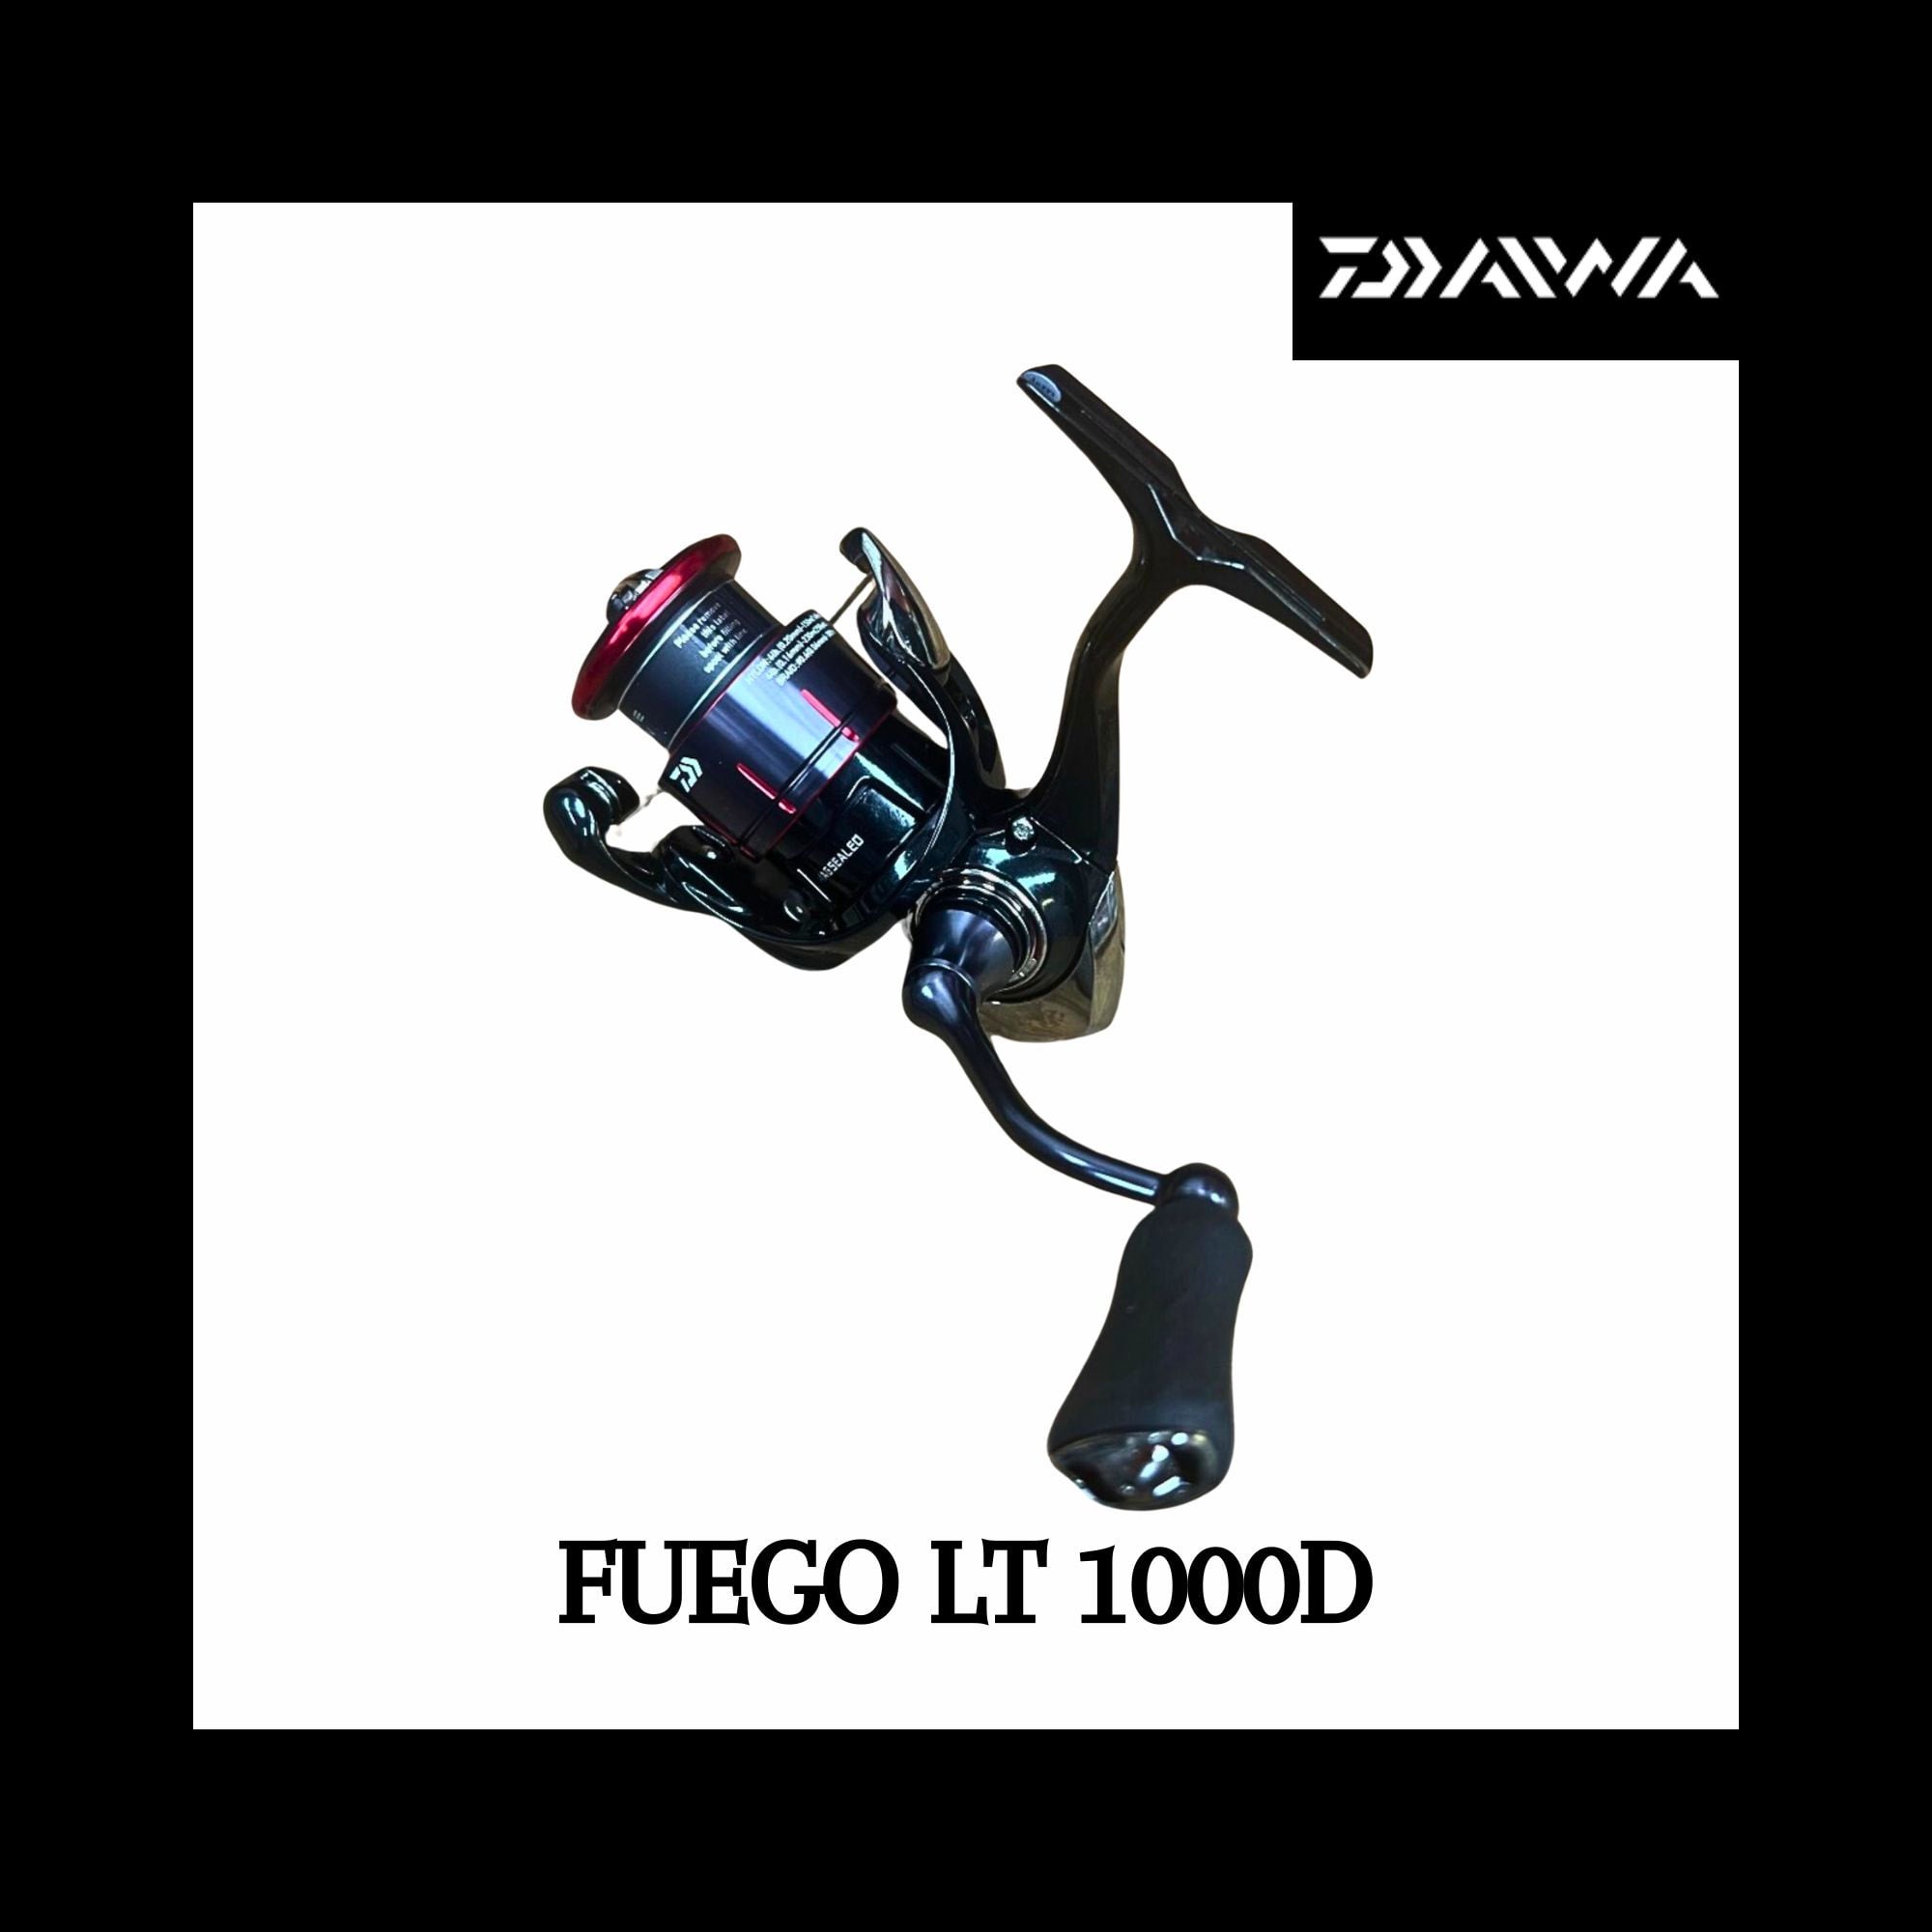 Fuego LT 1000D Spinning Fishing Reel, DAIWA